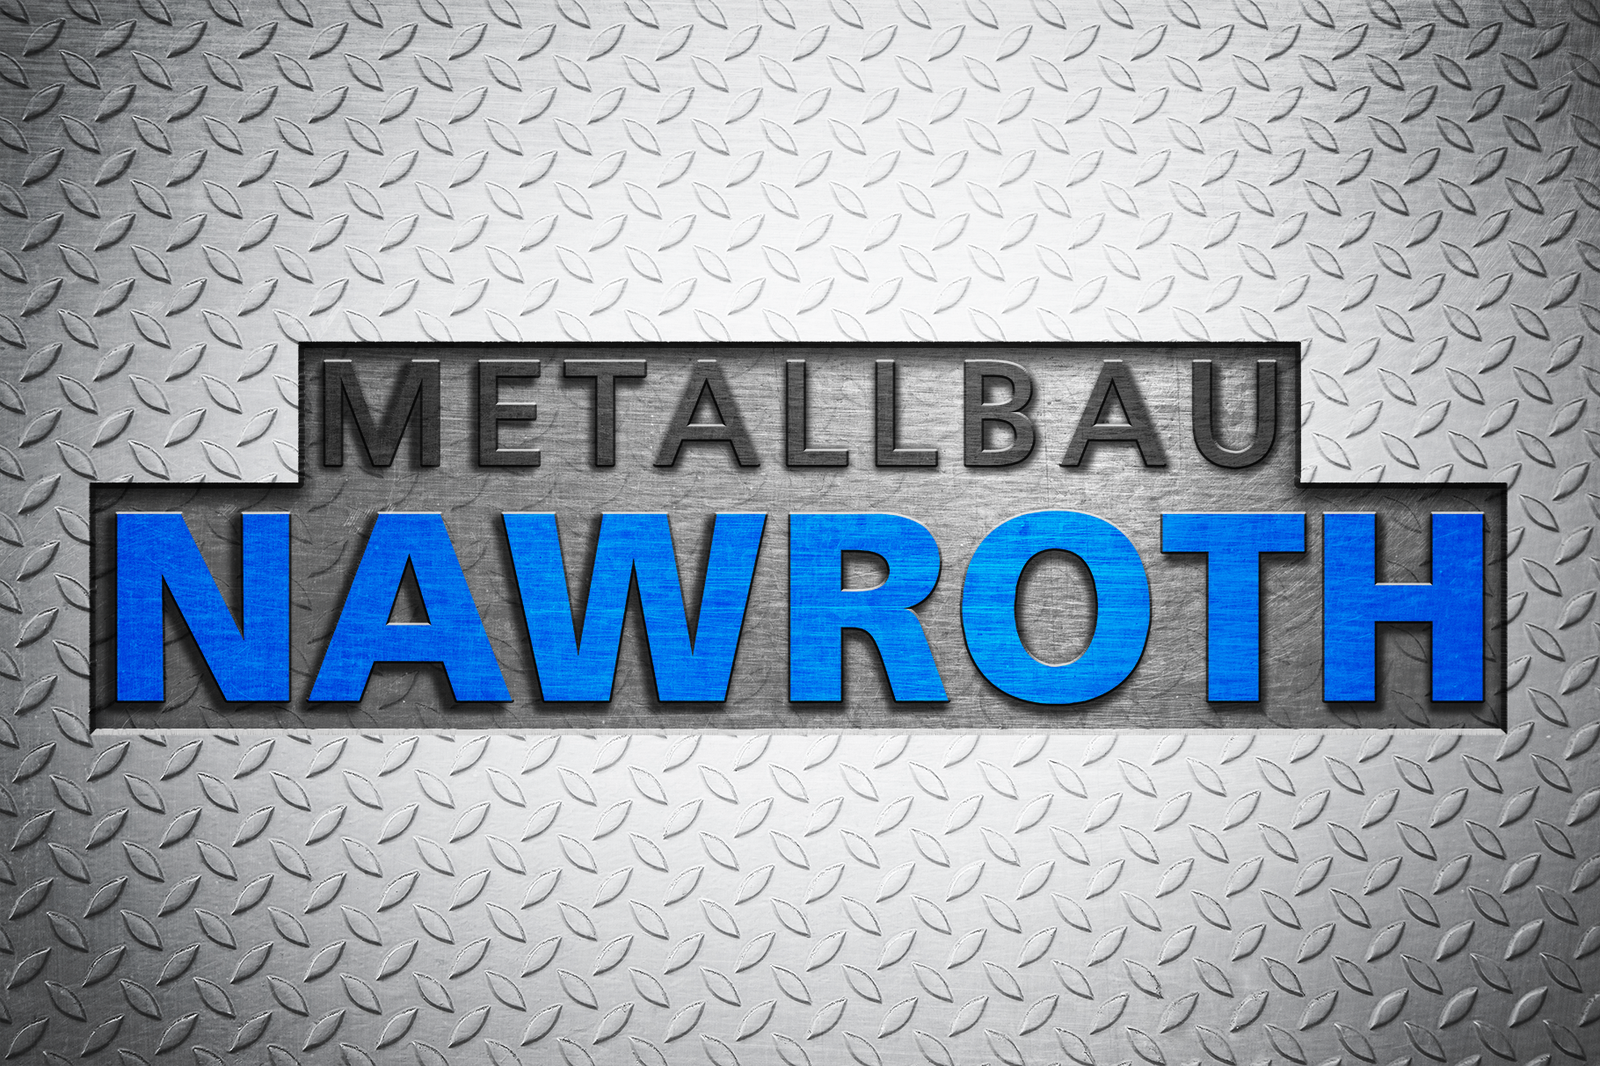 Metallbaumanufaktur Nawroth